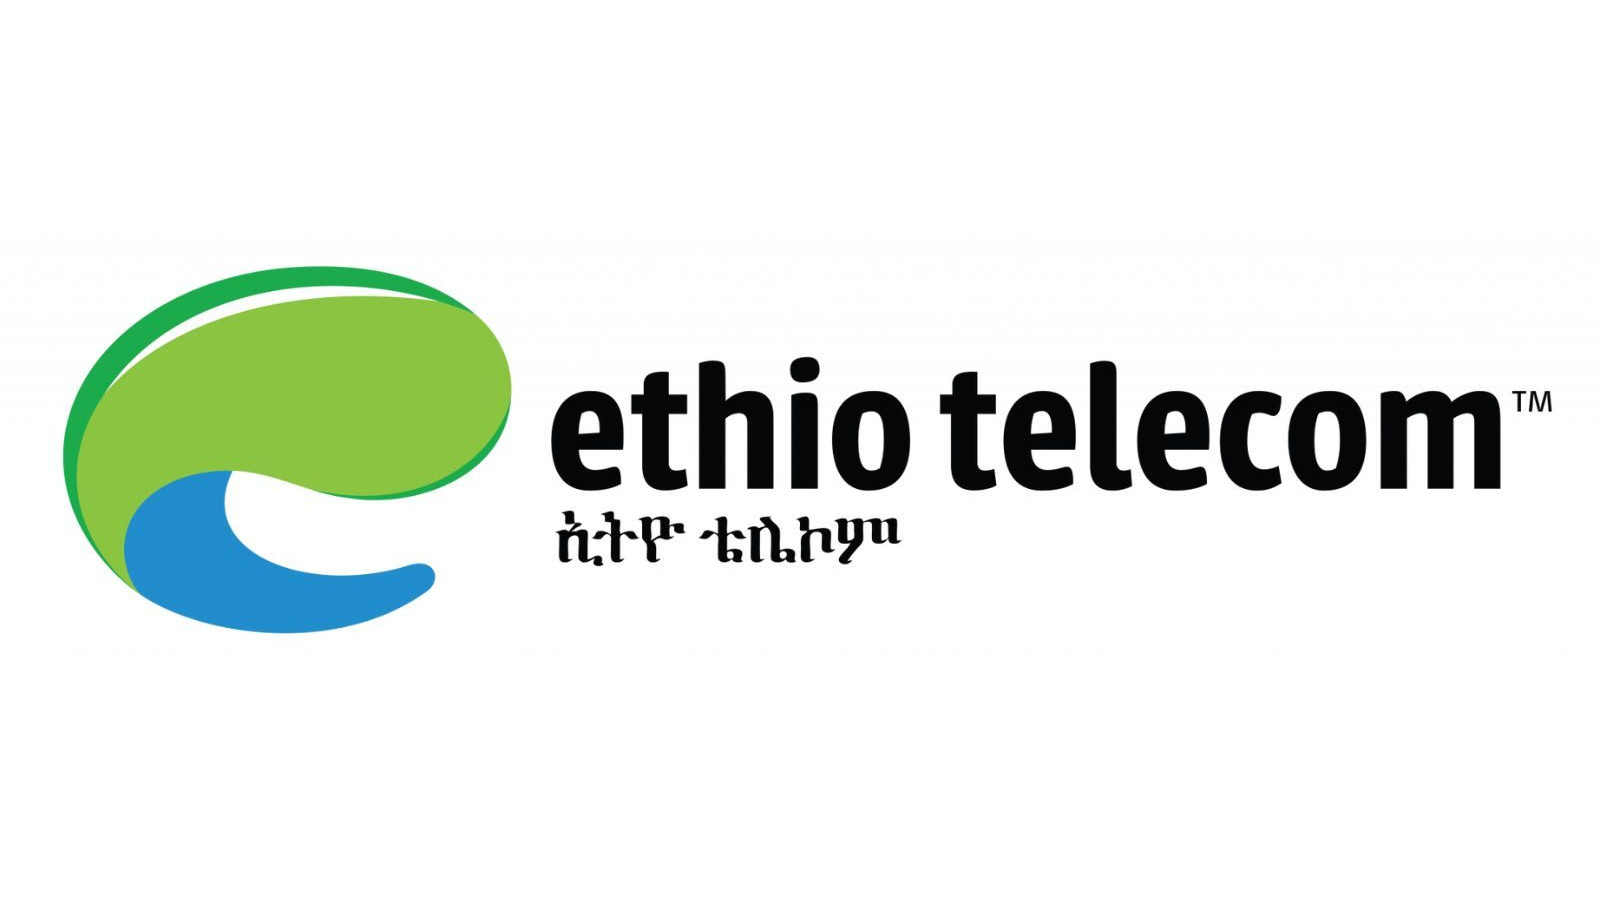 Ethiotelecom 5 ETB Mobile Top-up ET 0.68 $